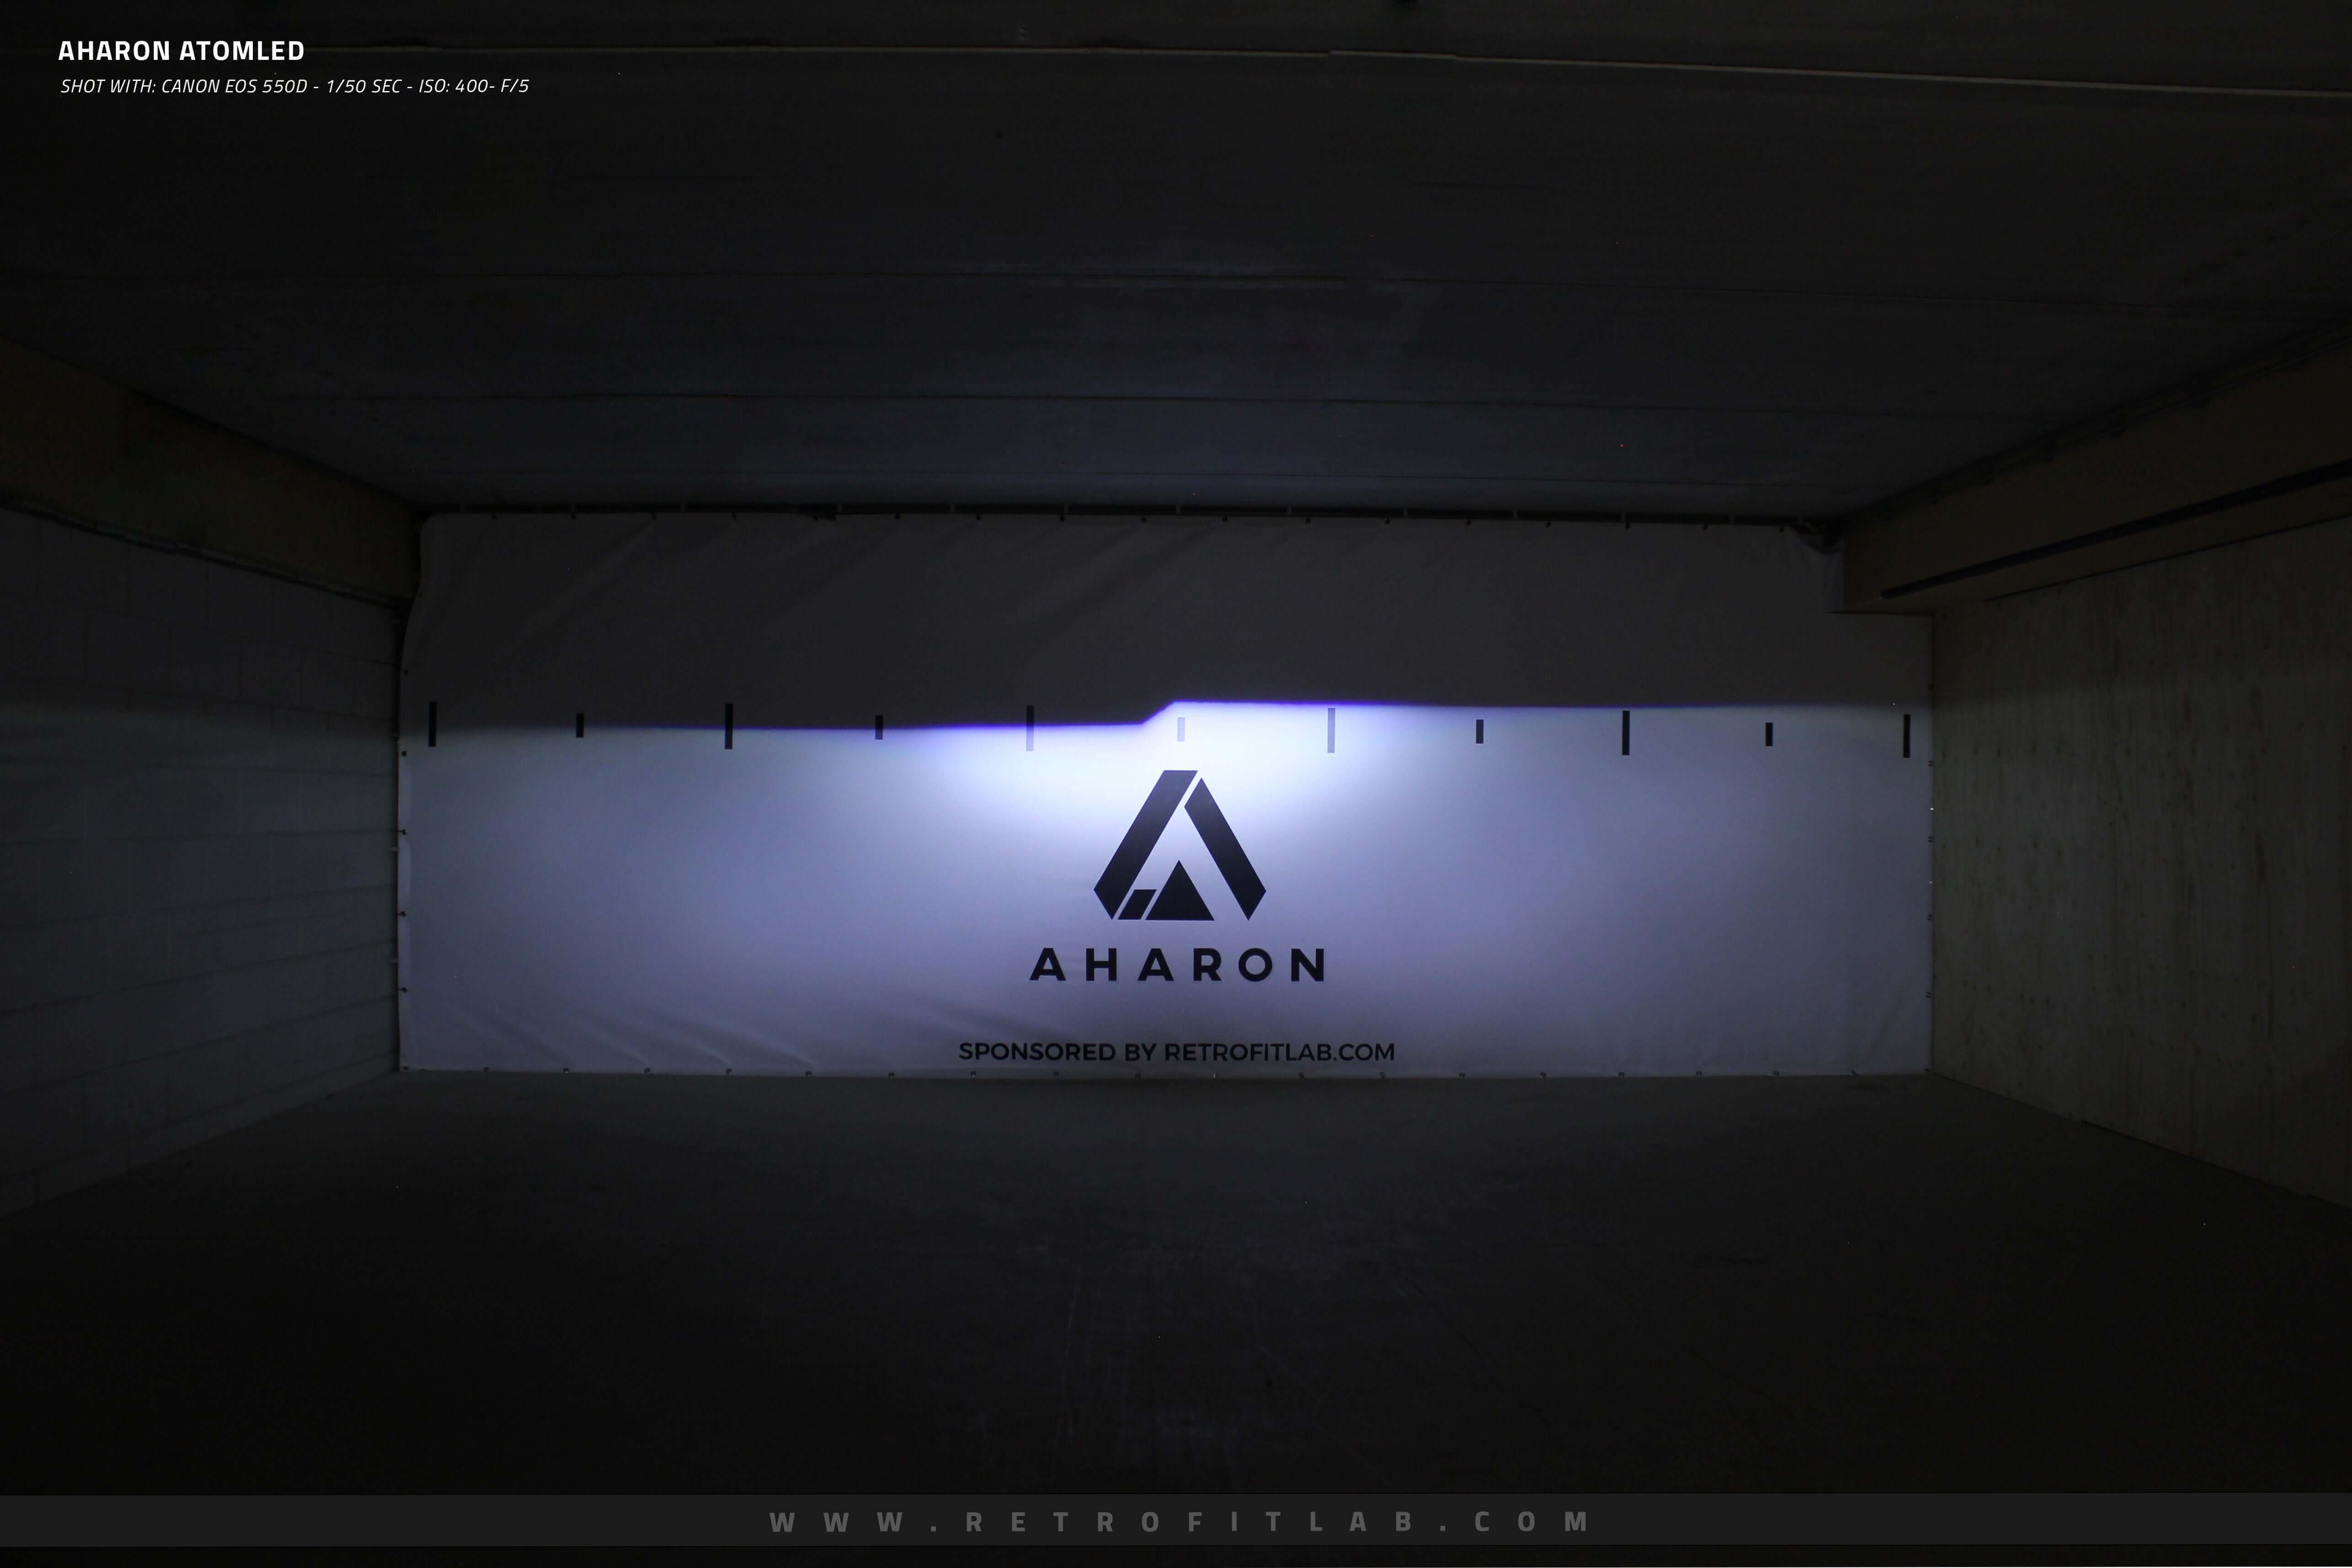 Aharon bi-led projector AtomLED X2 Retrofitlab low beam output